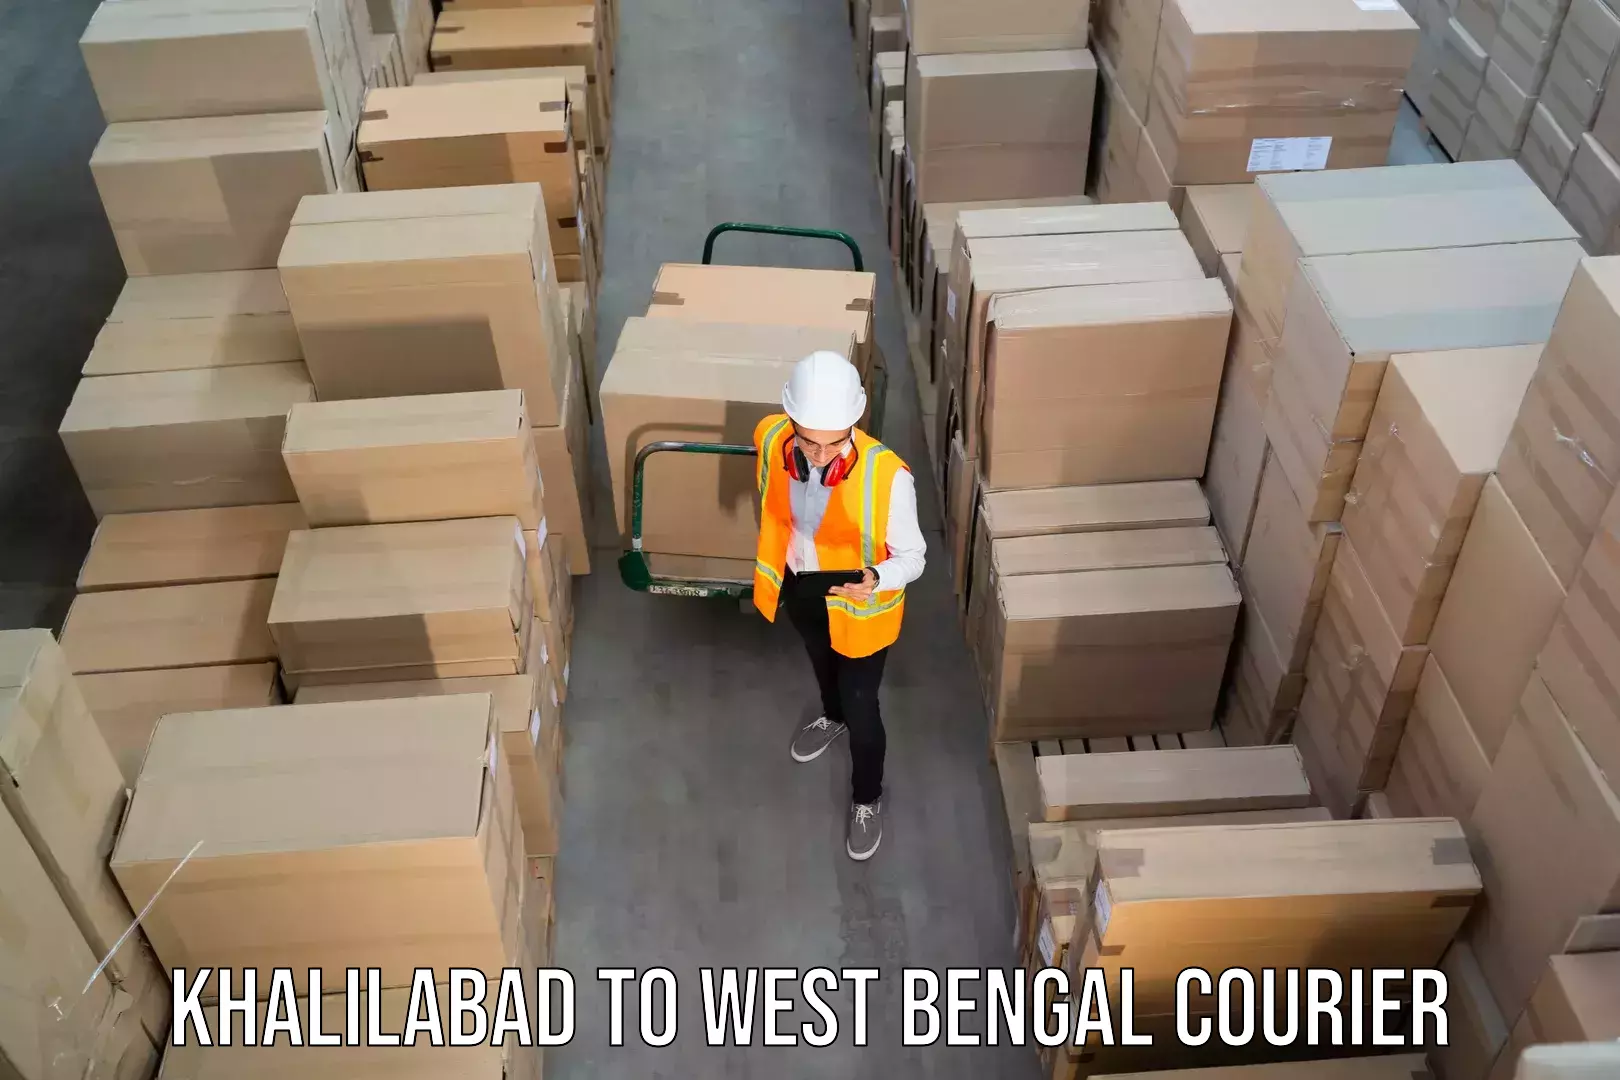 Professional courier services Khalilabad to Kolkata Port